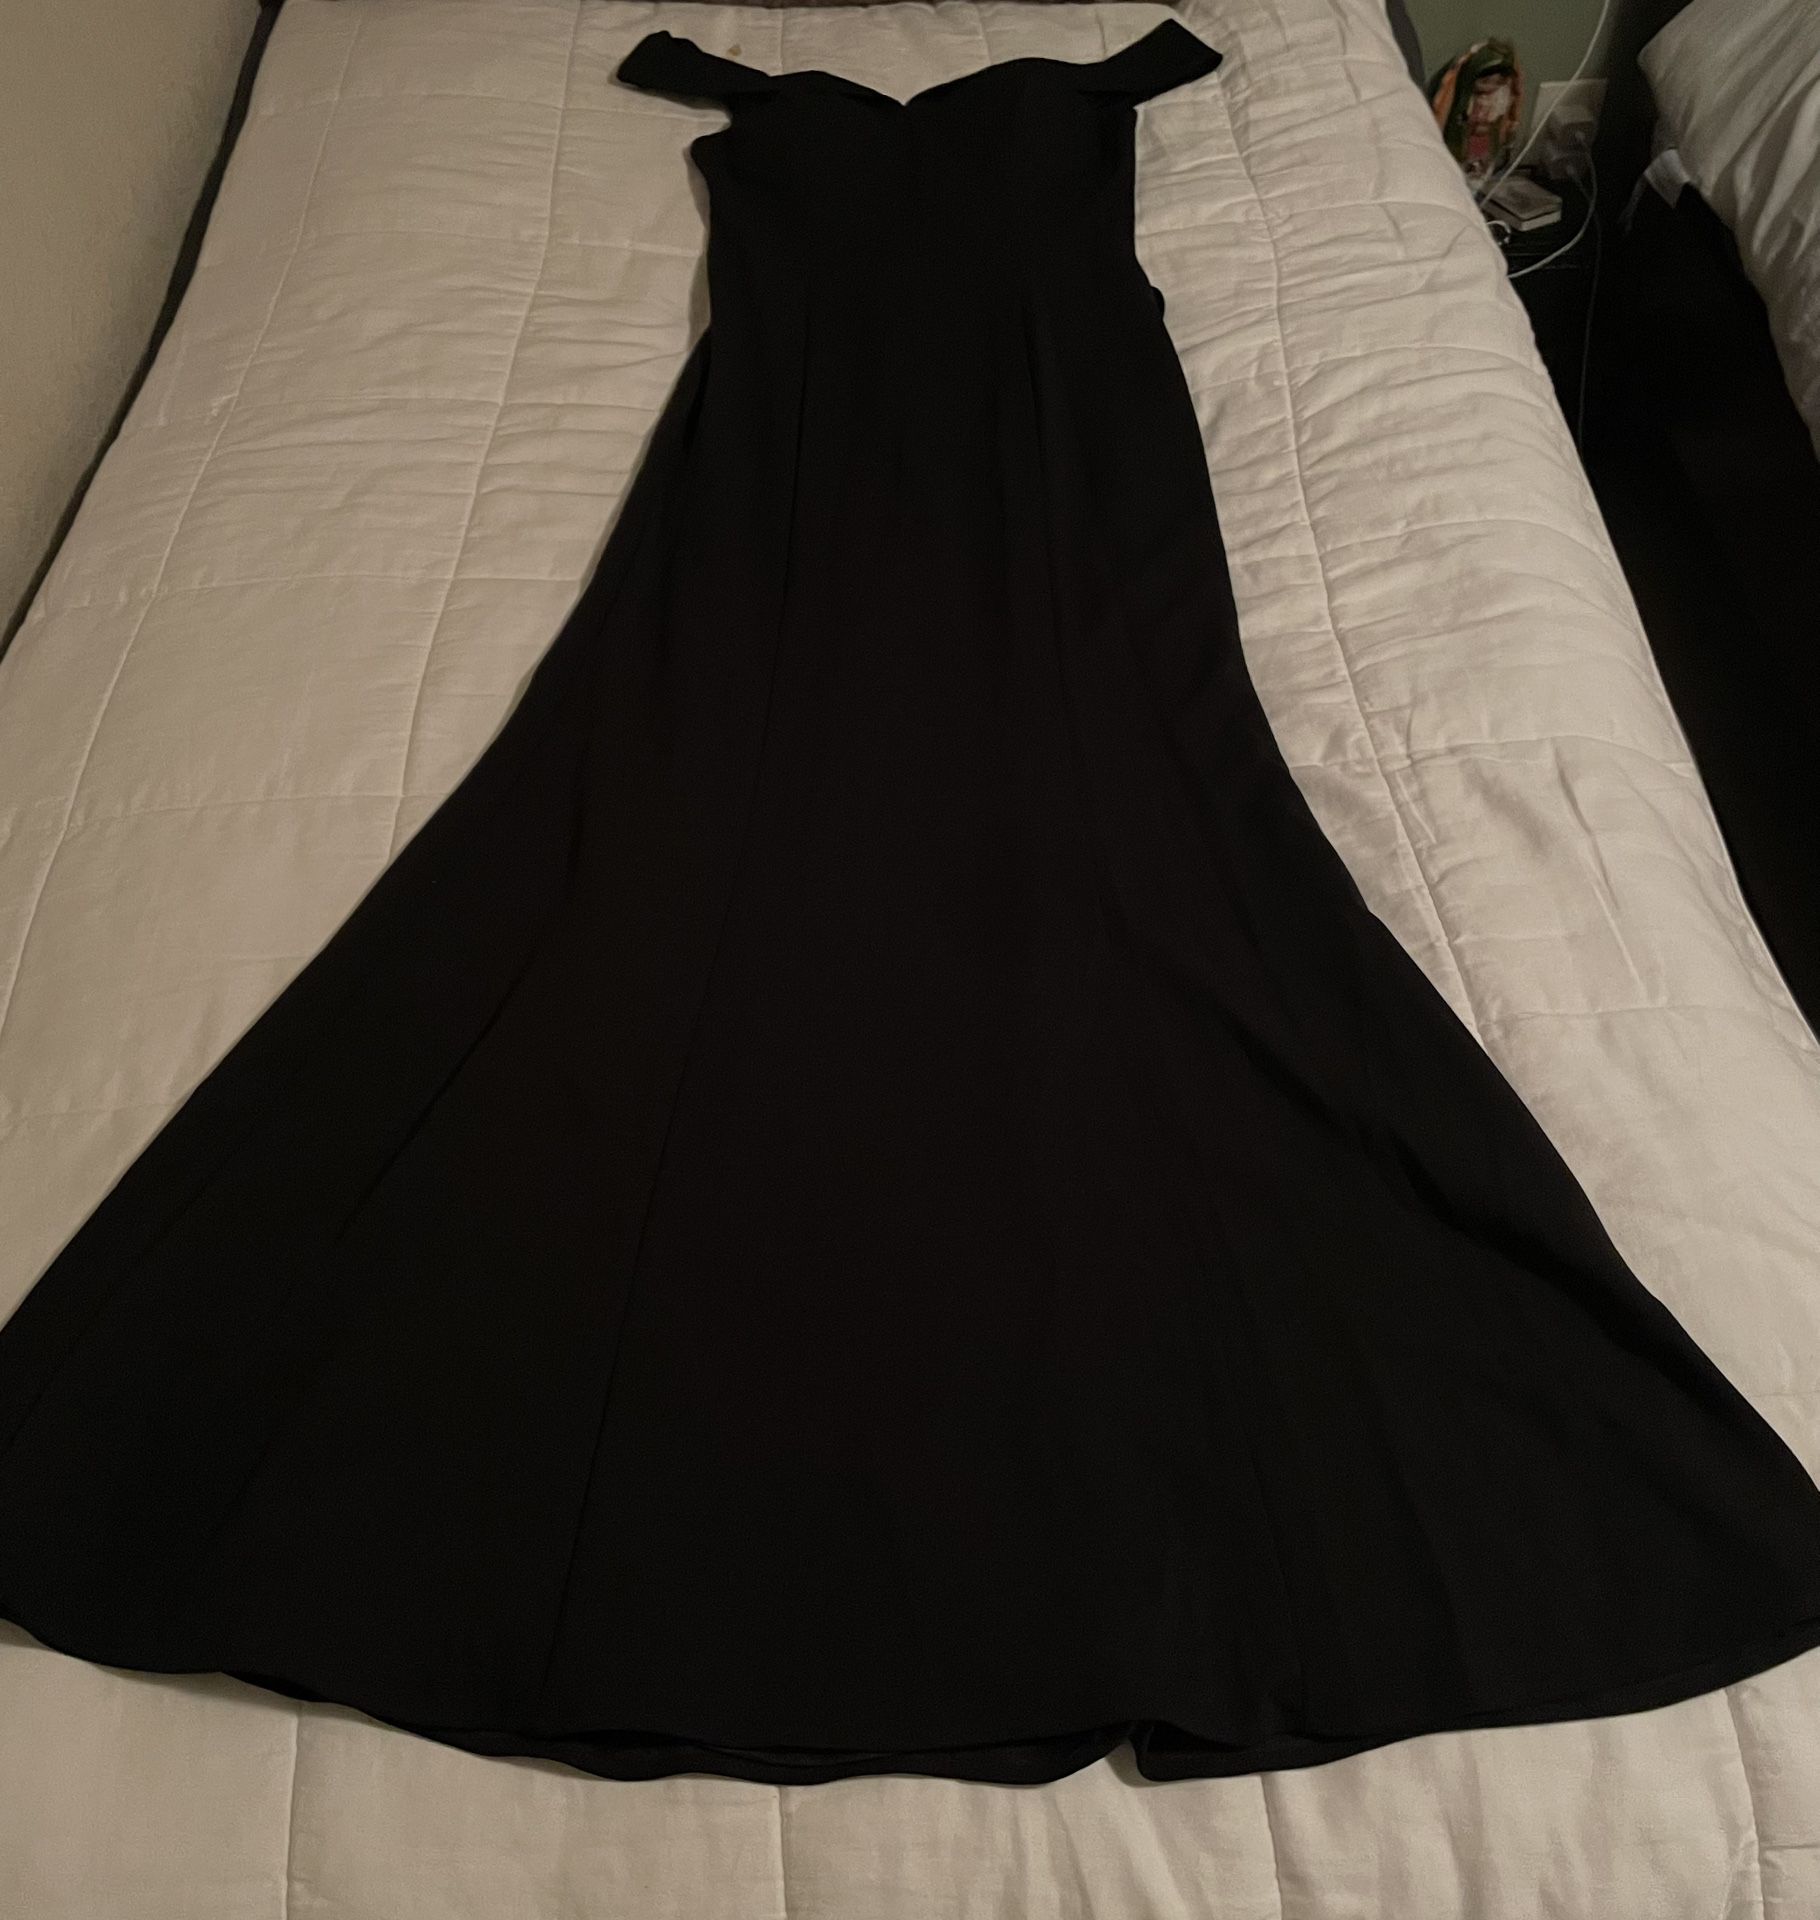 Formal Black Dress